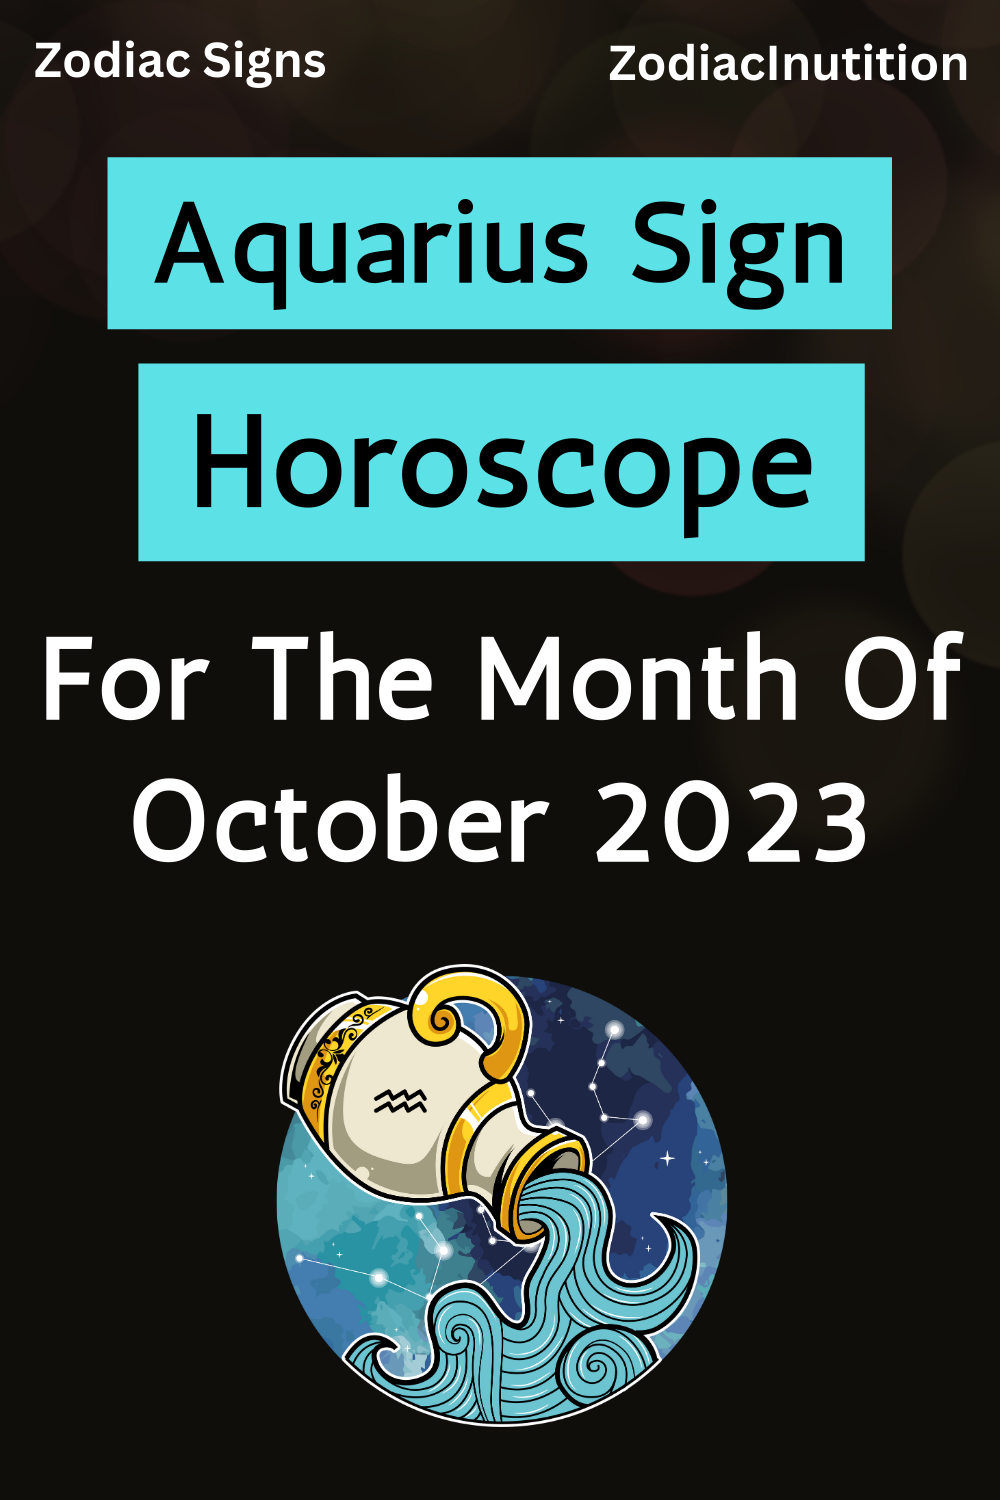 Aquarius: Horoscope For The Month Of October 2023